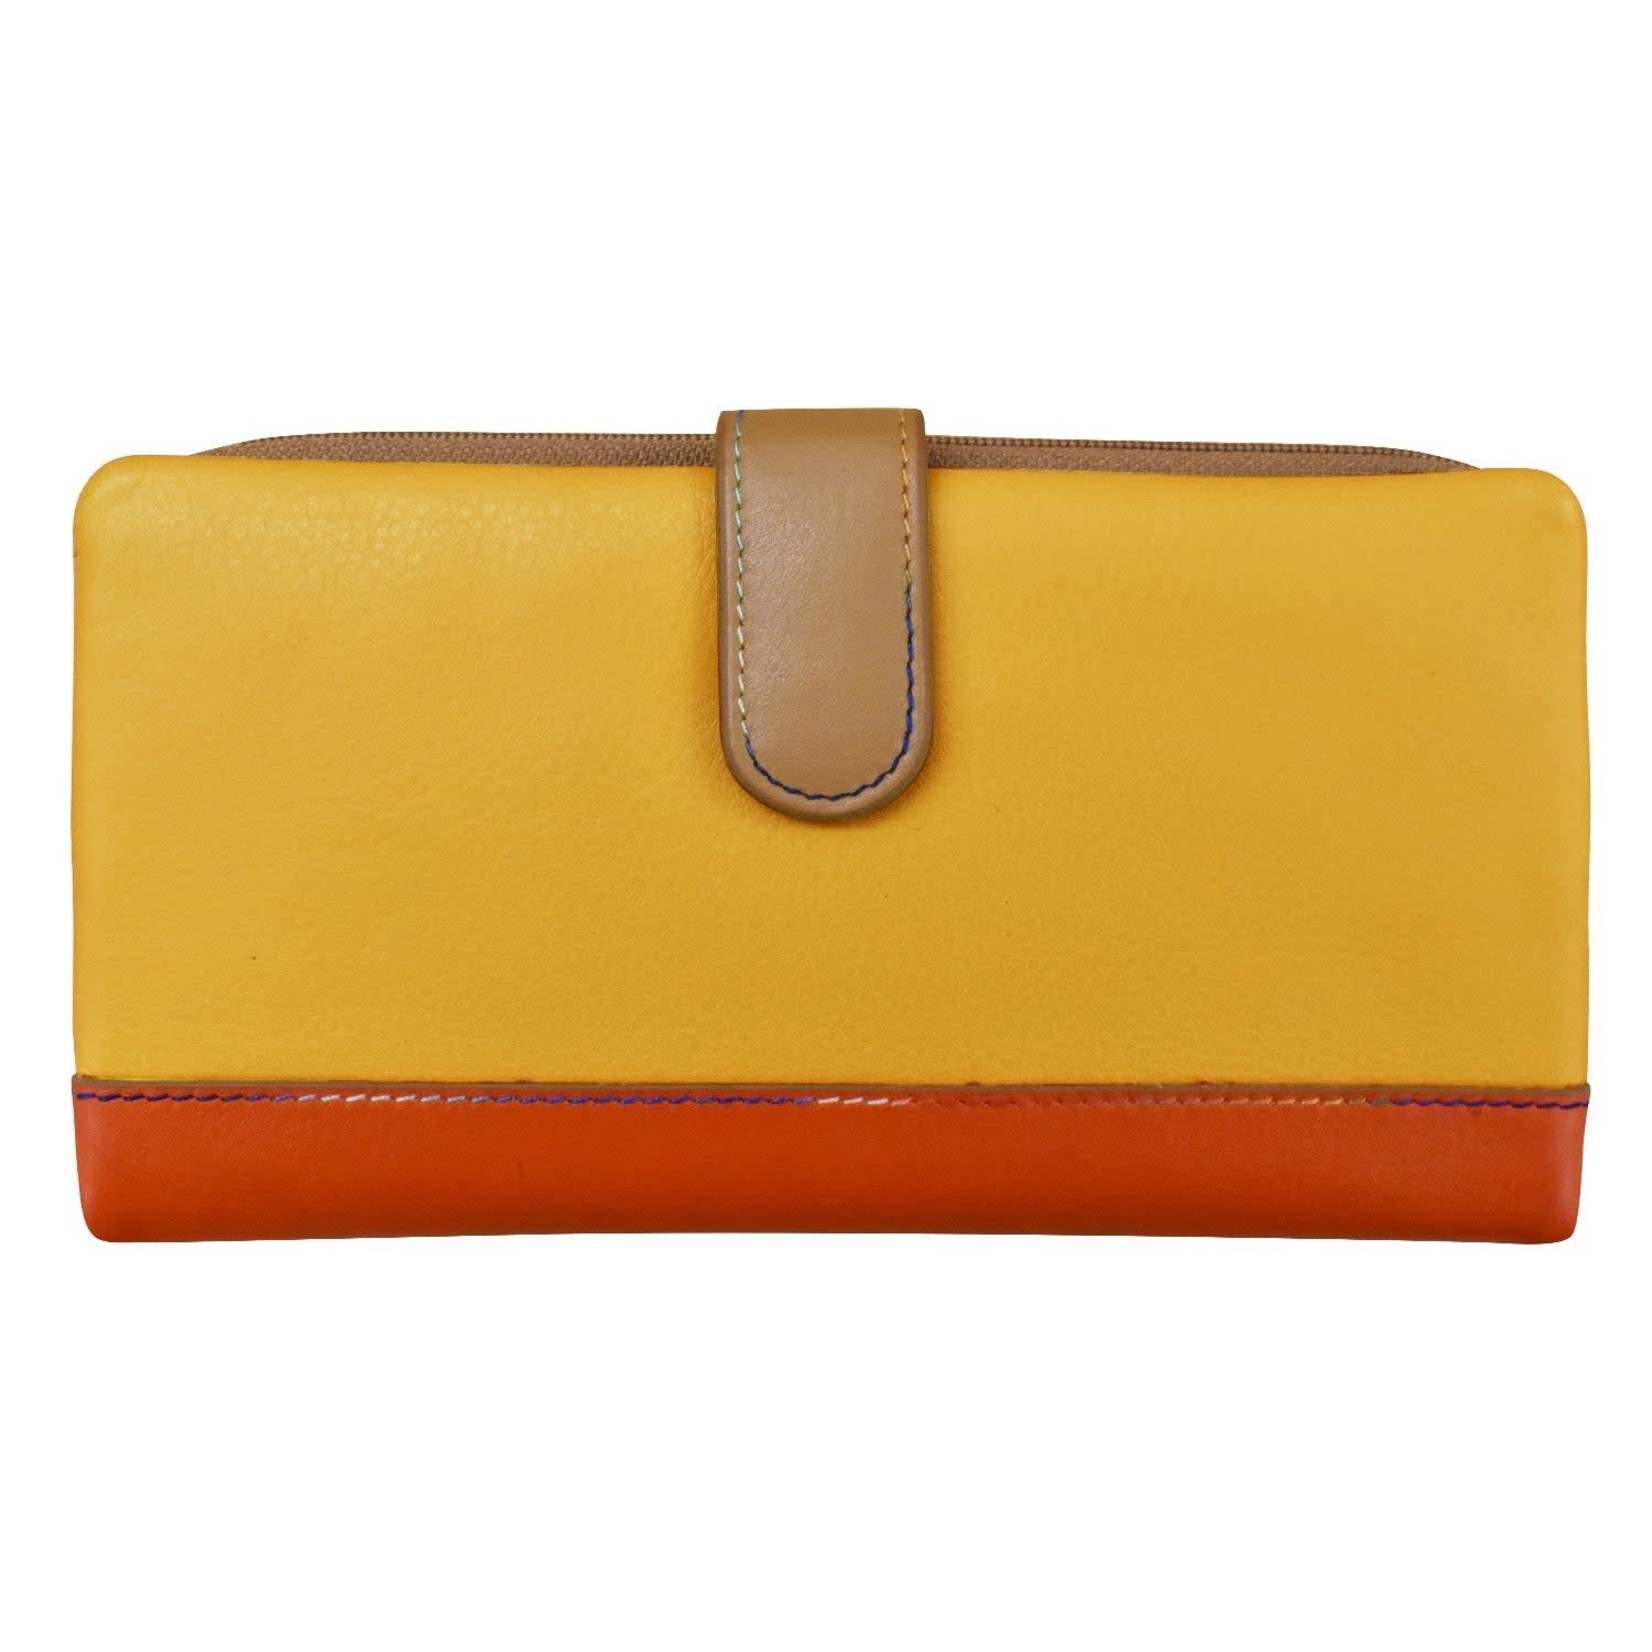 Leather Handbags and Accessories 7420 Rainbow Multi - RFID Smartphone Wallet